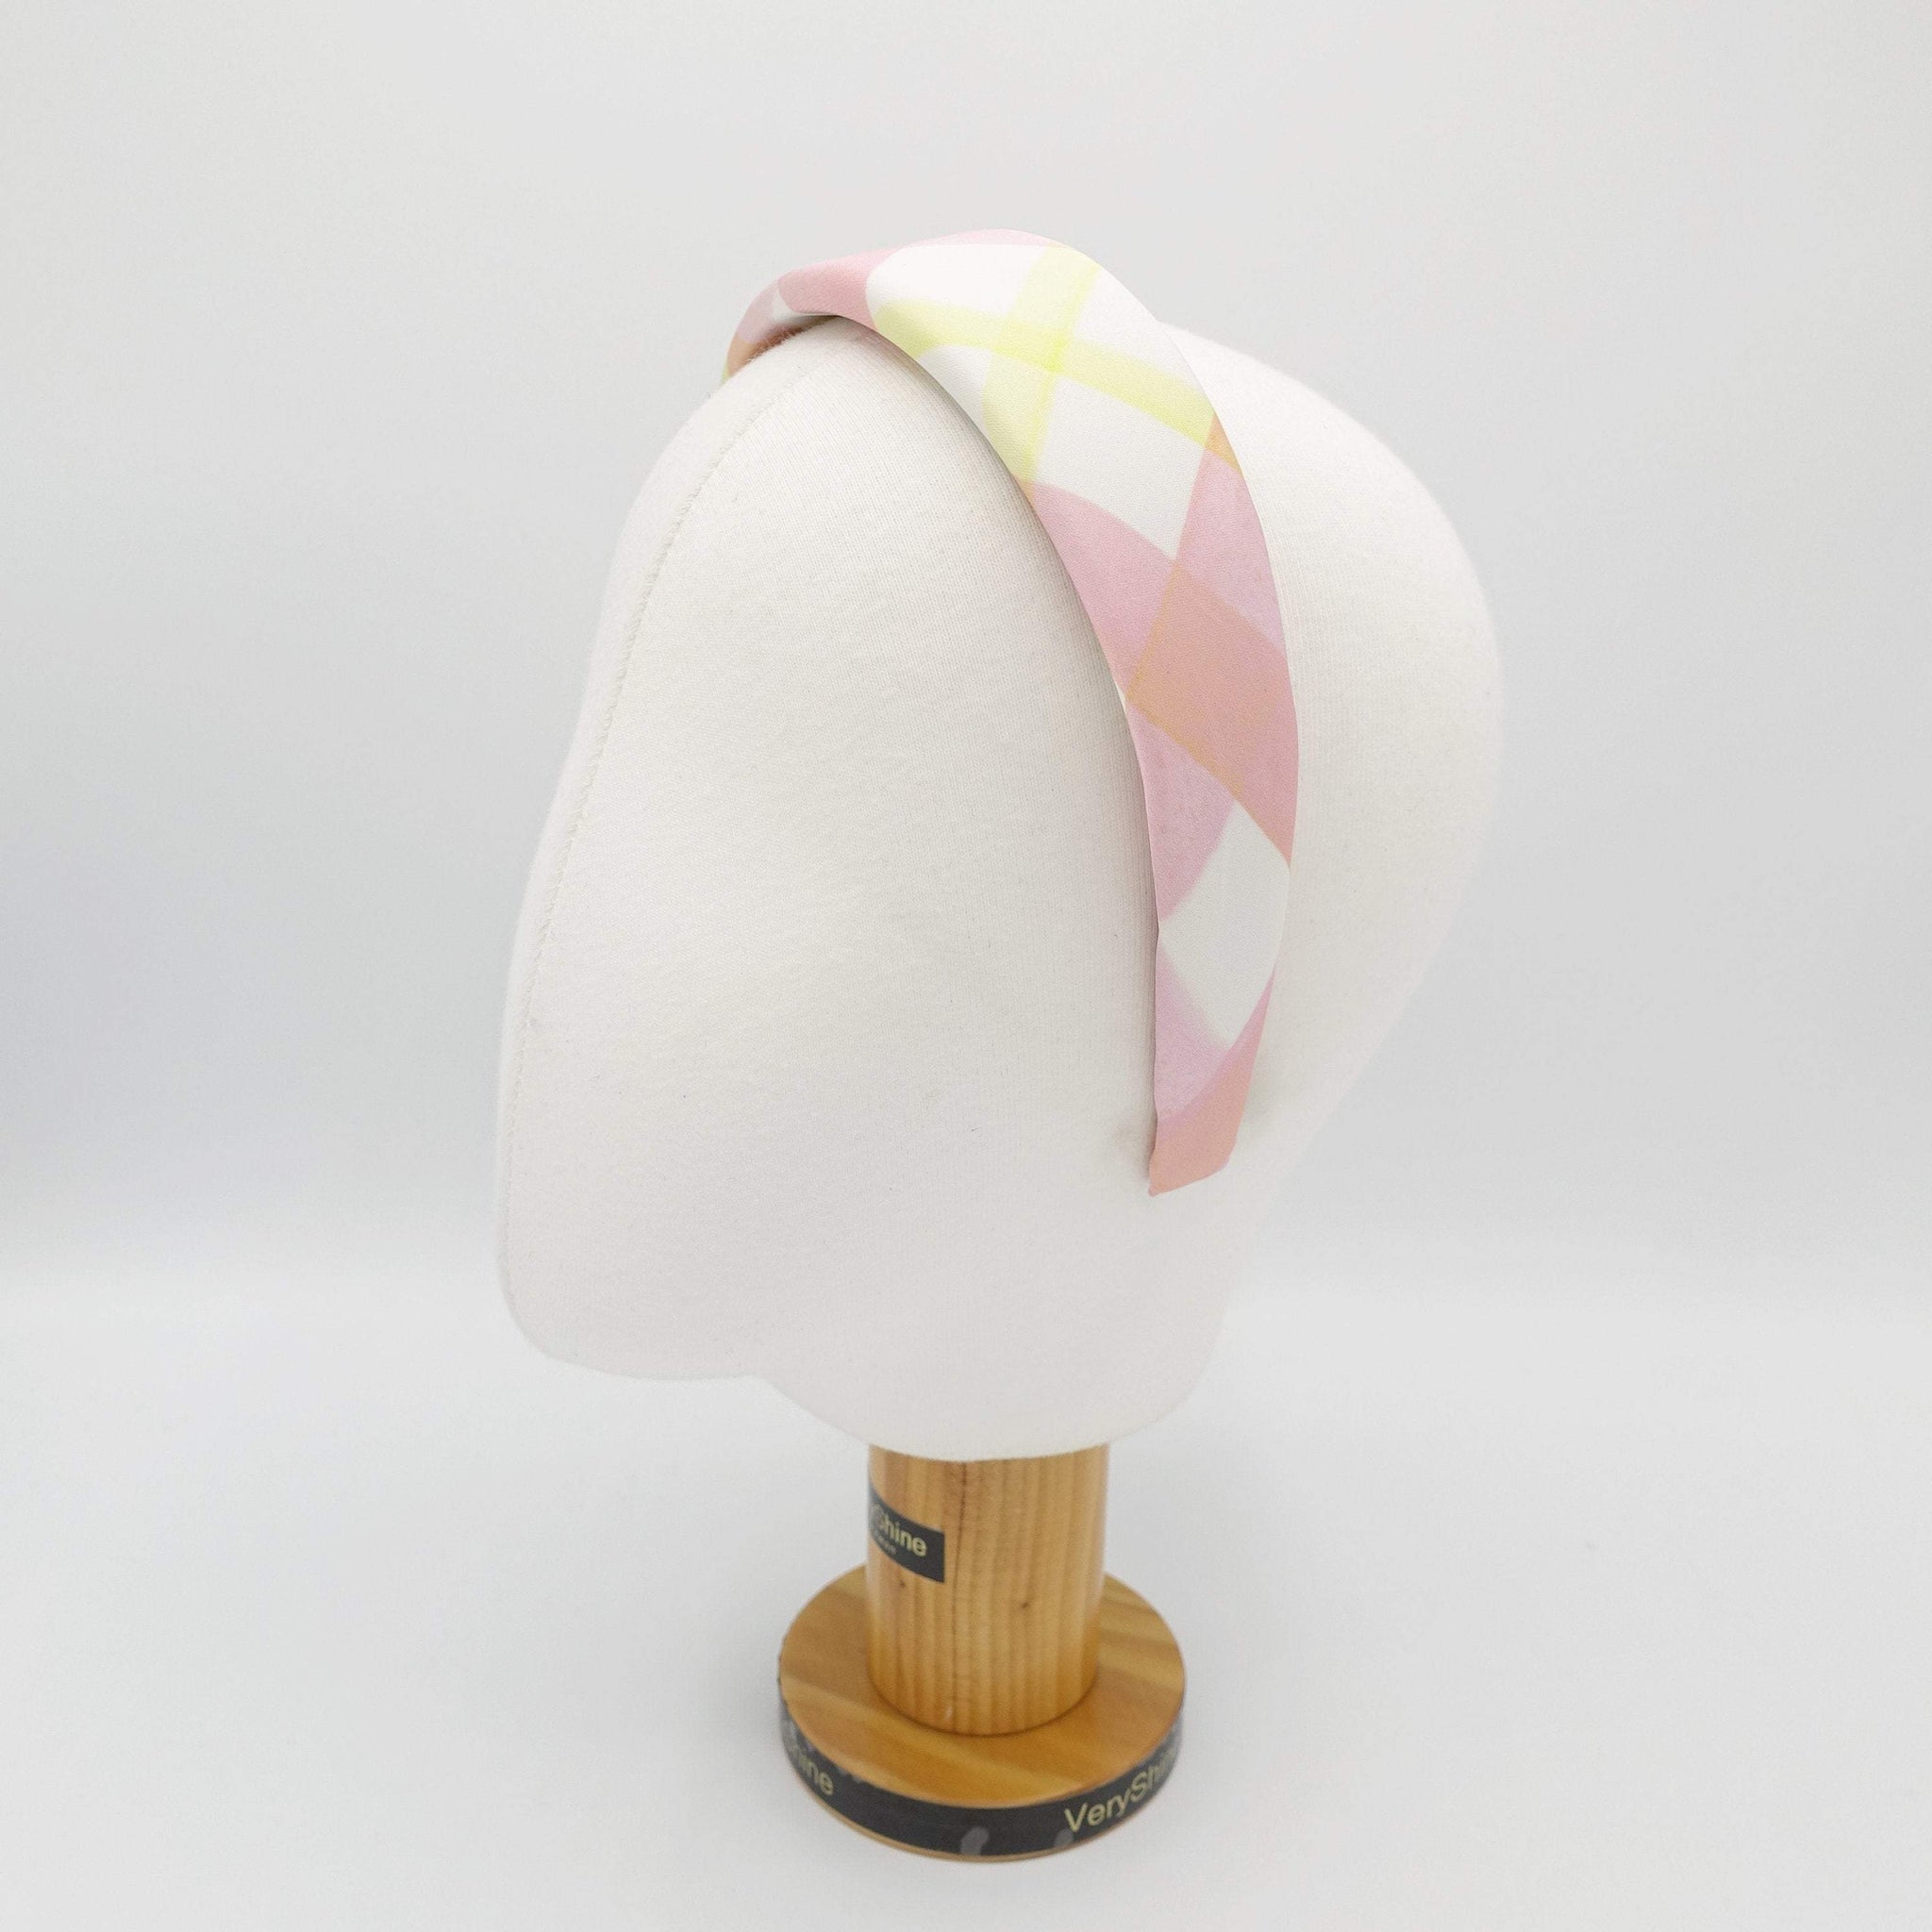 VeryShine hairband/headband colorful check headband padded Spring Summer hairband for women